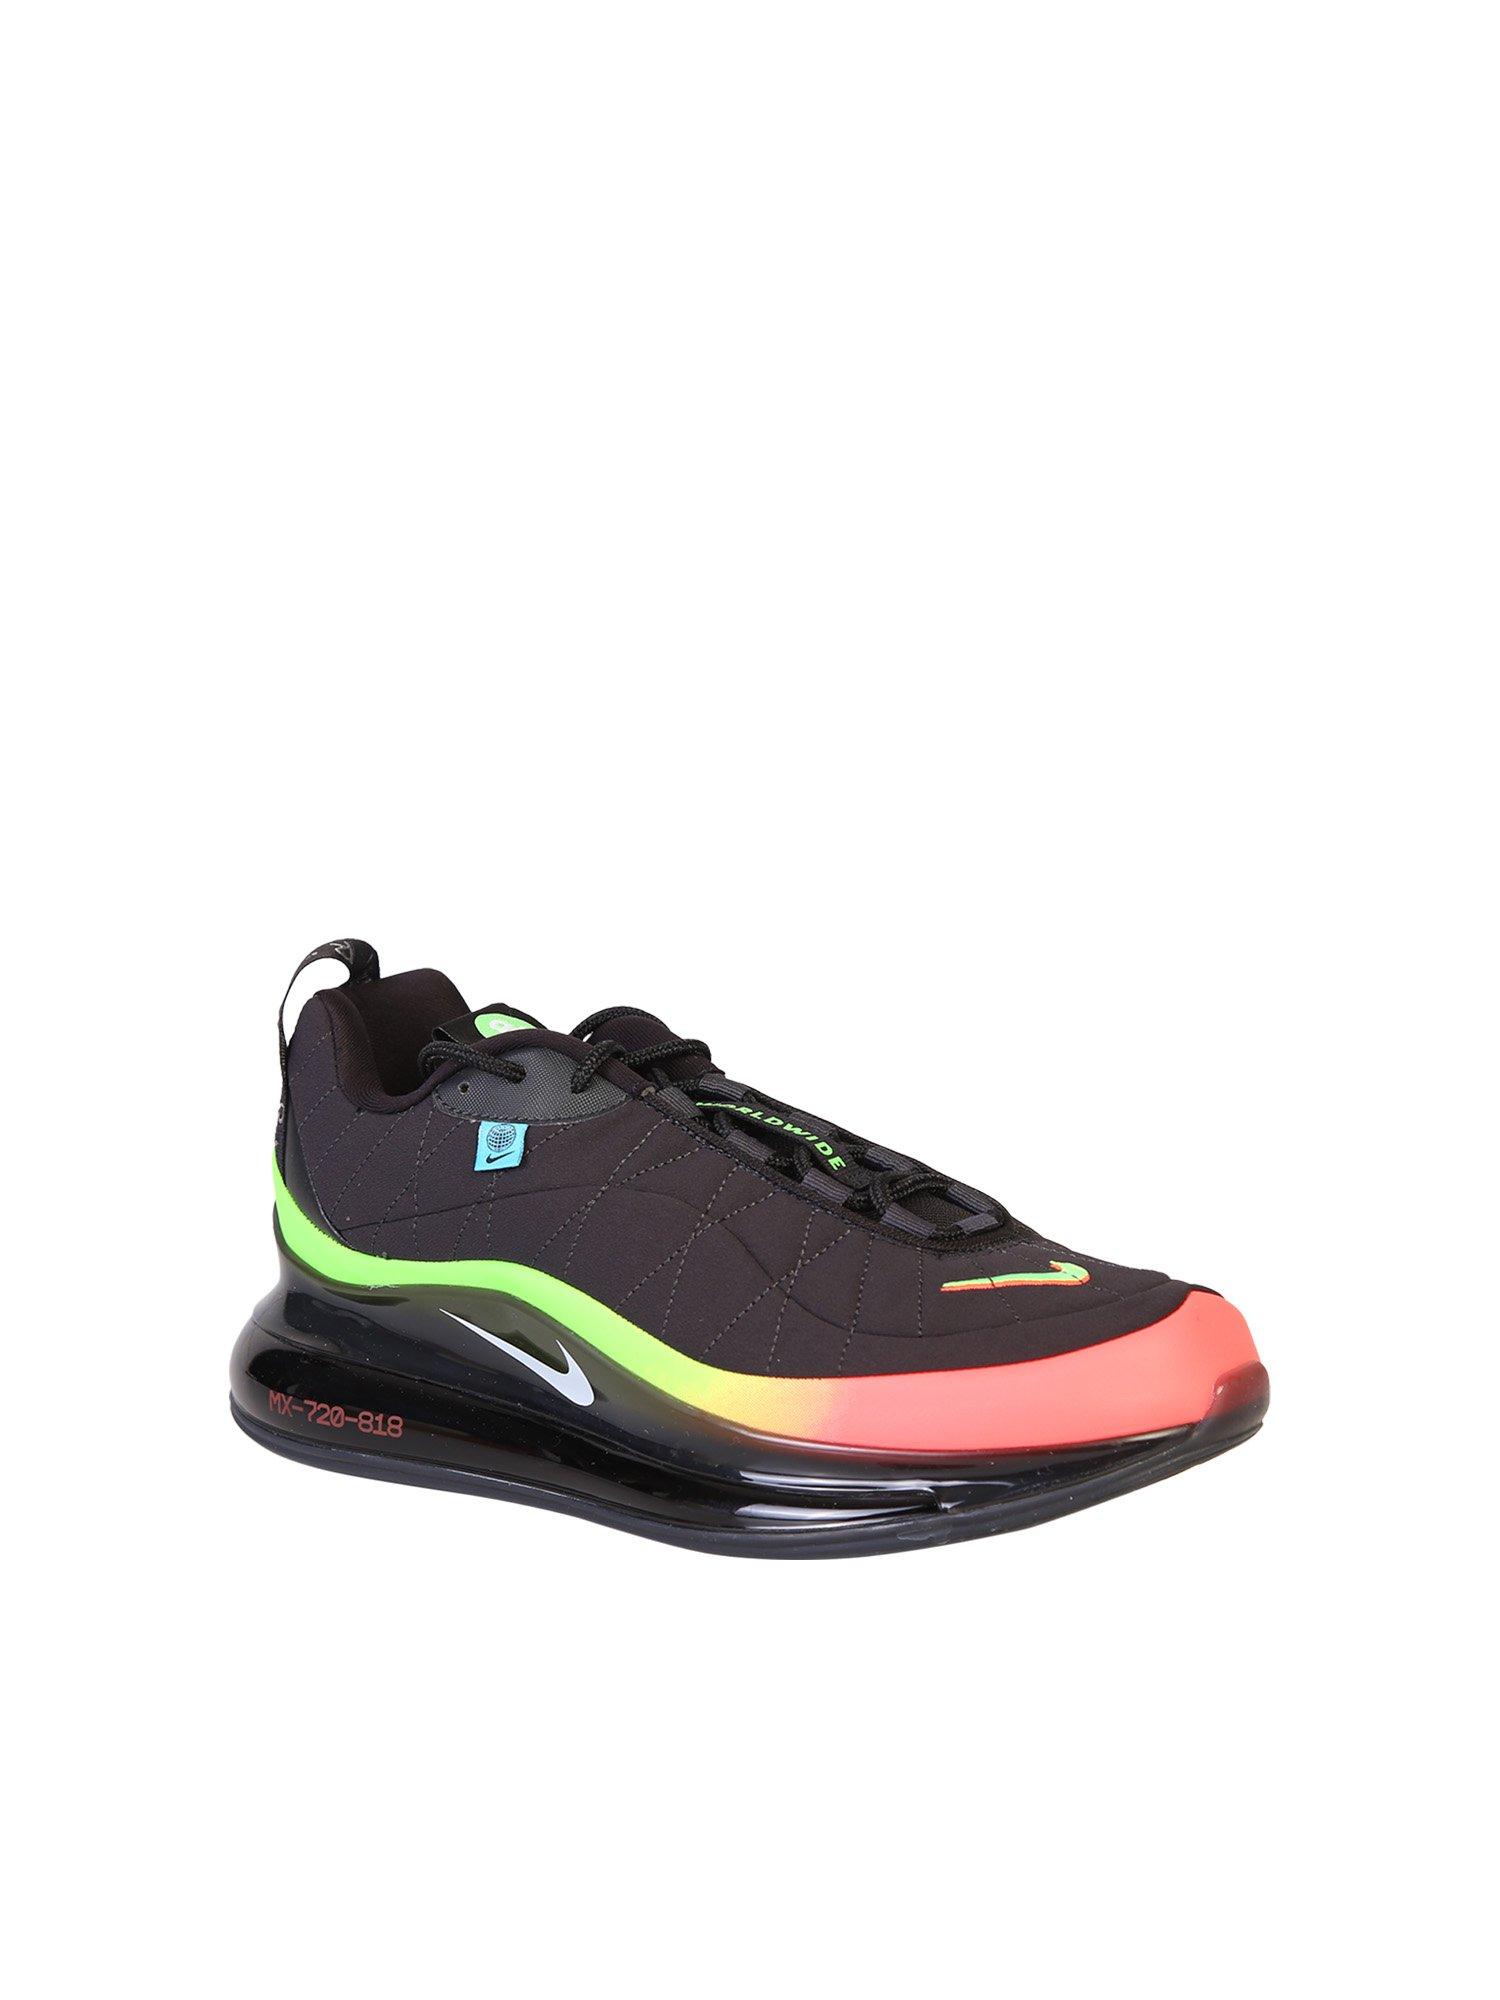 Nike MX-720-818 Sneaker - Black